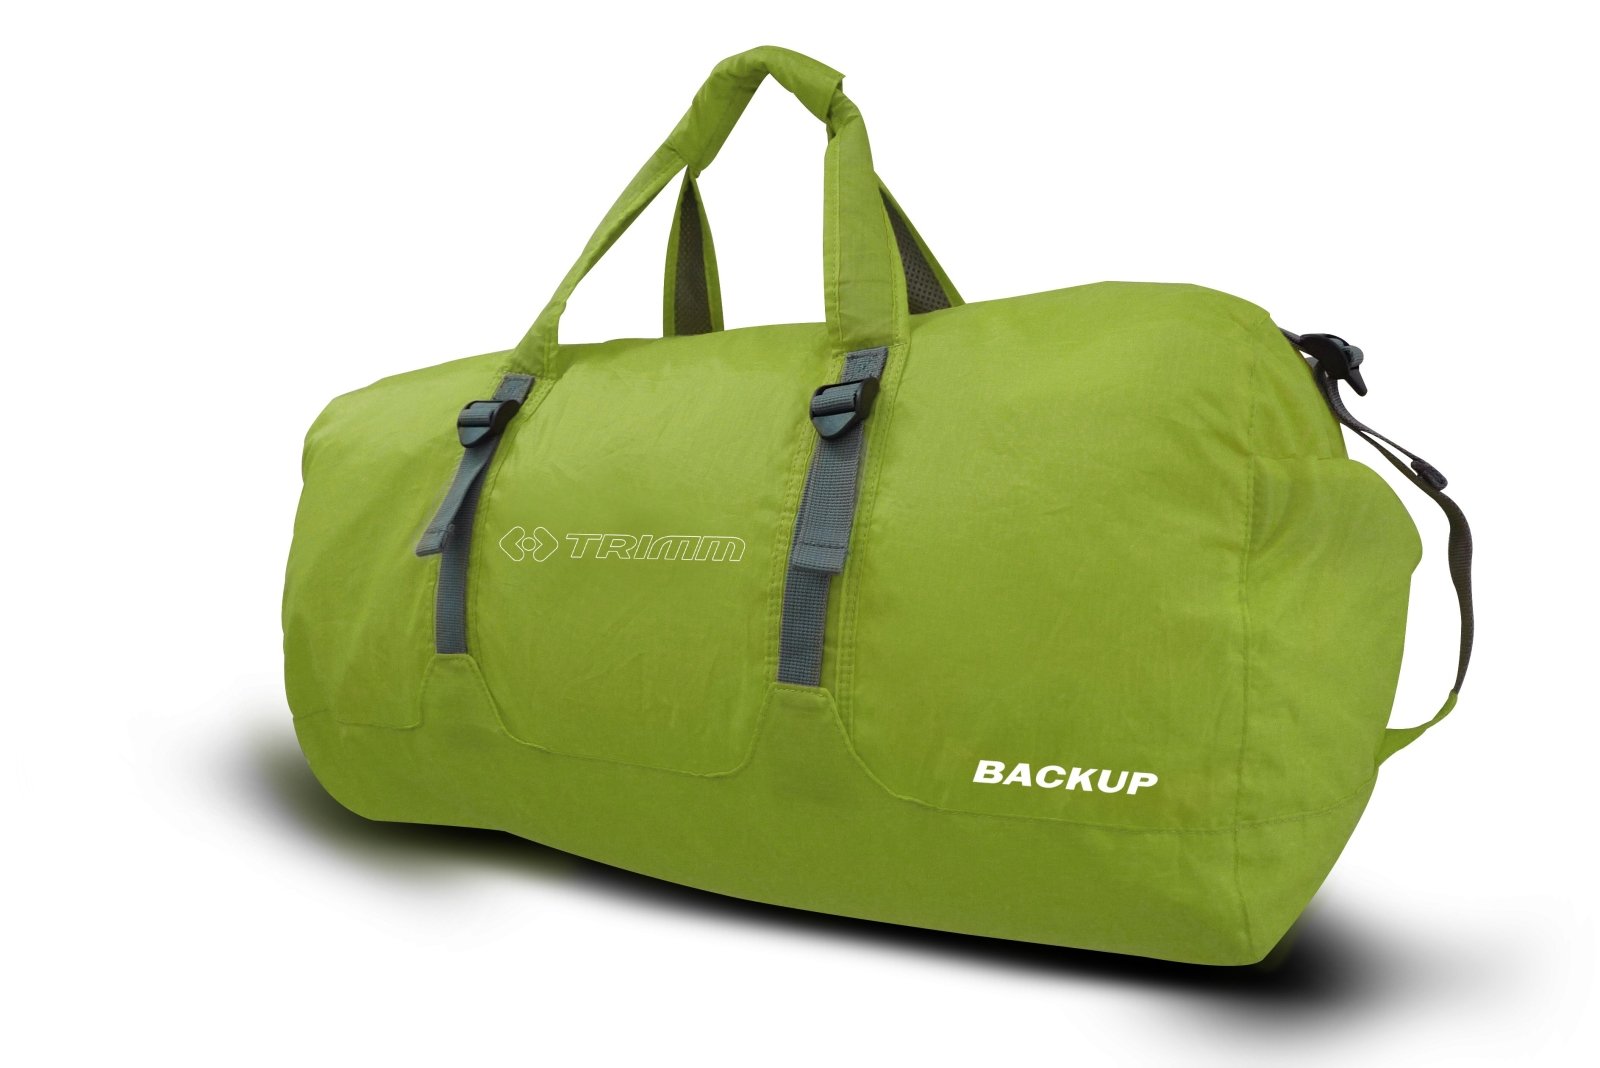 Trimm BACKUP Lime Green Bag